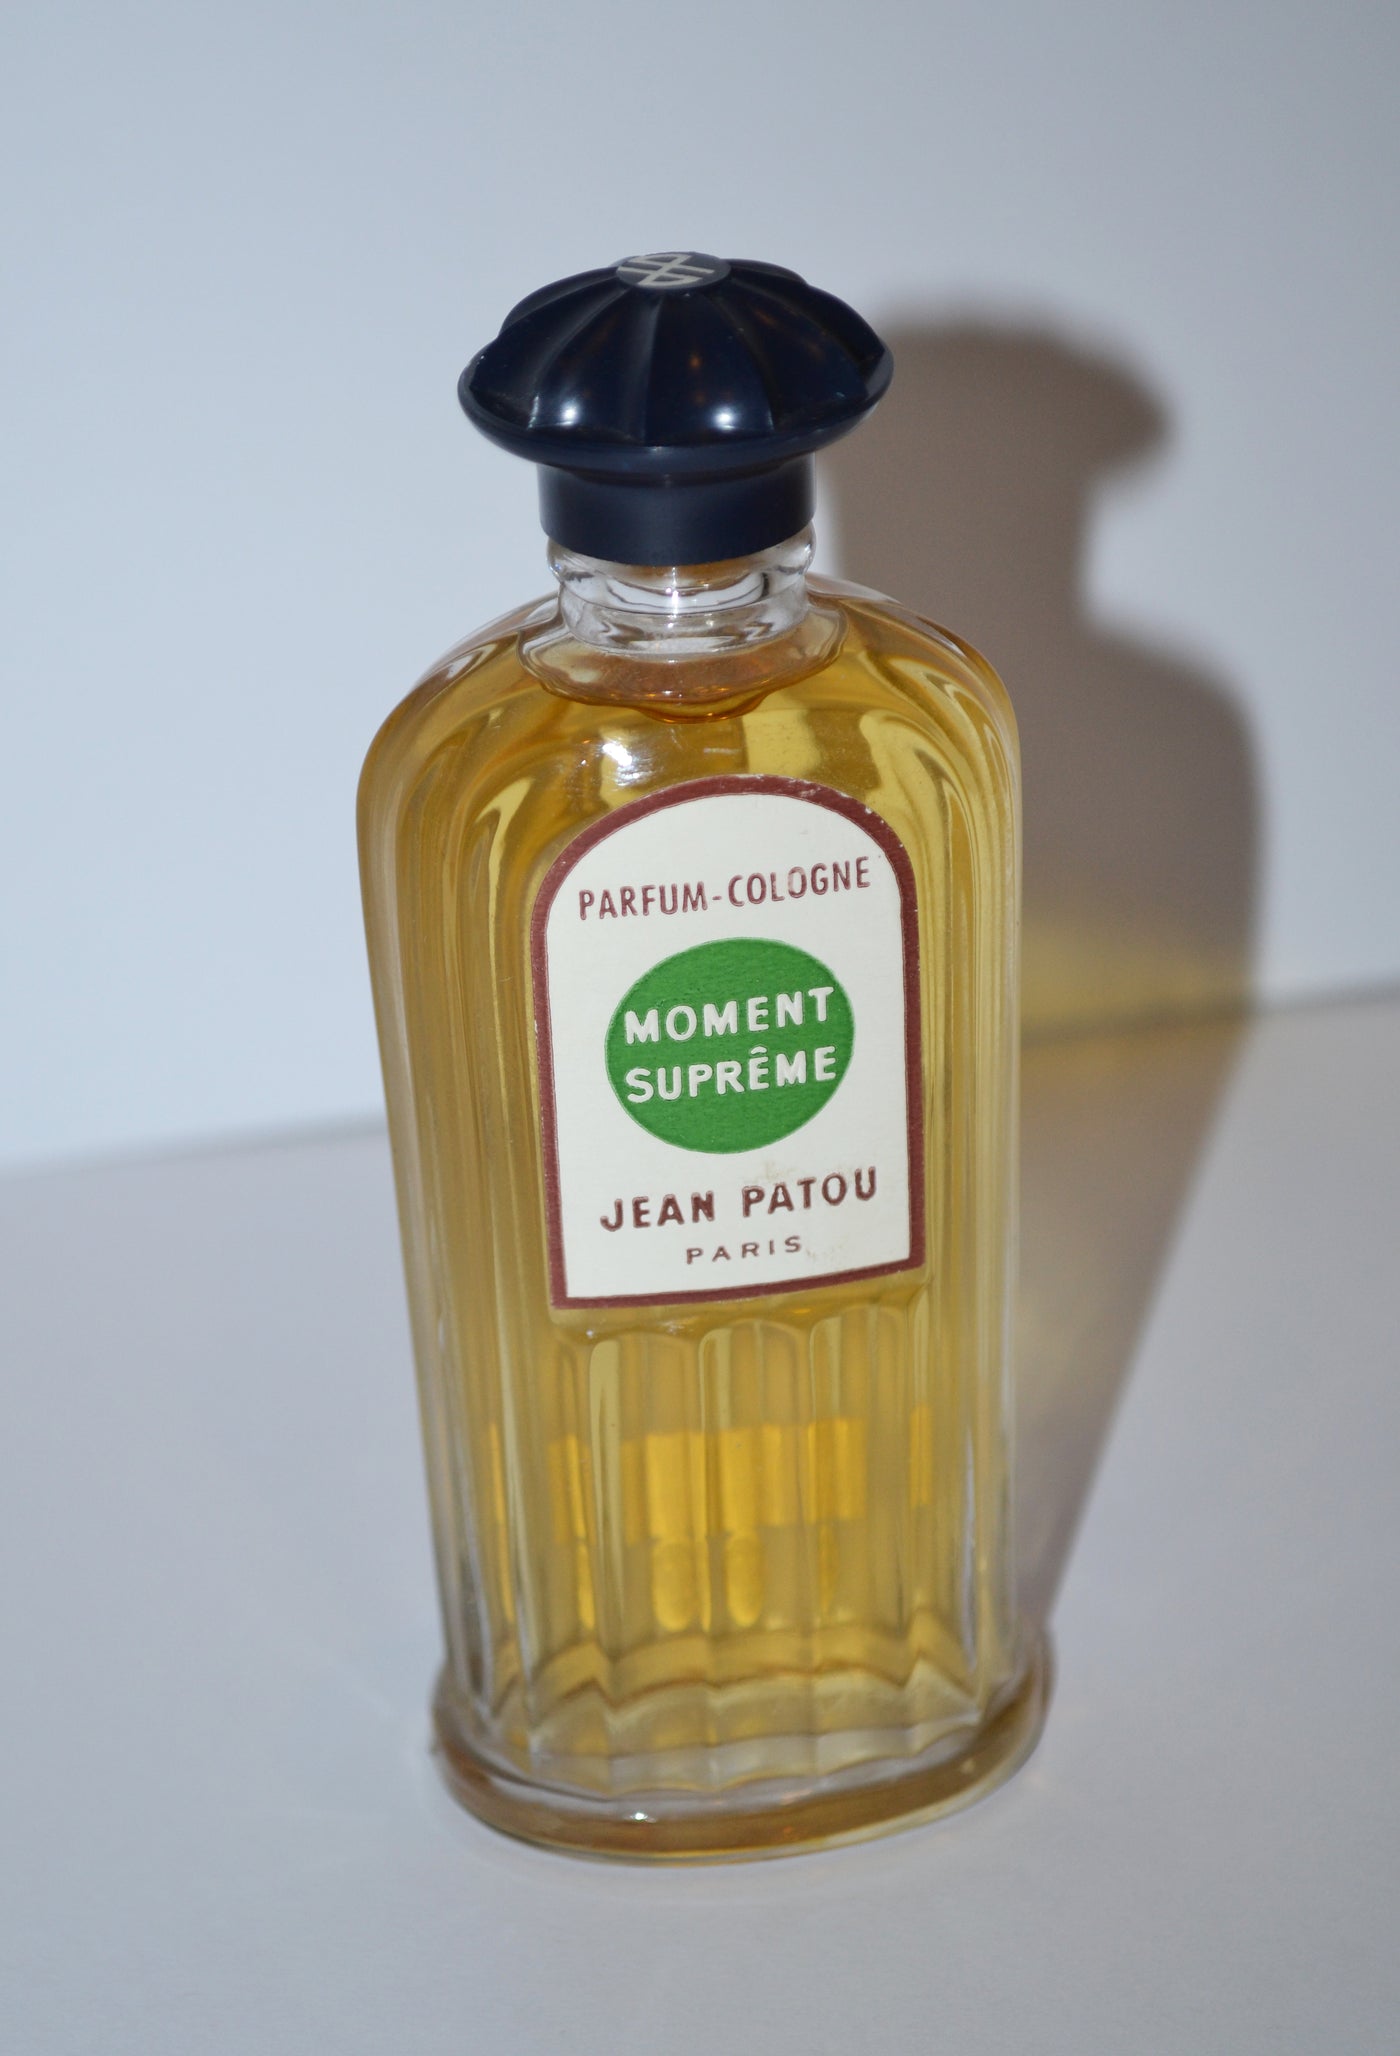 Moment Supreme Parfum-Cologne By Jean Patou